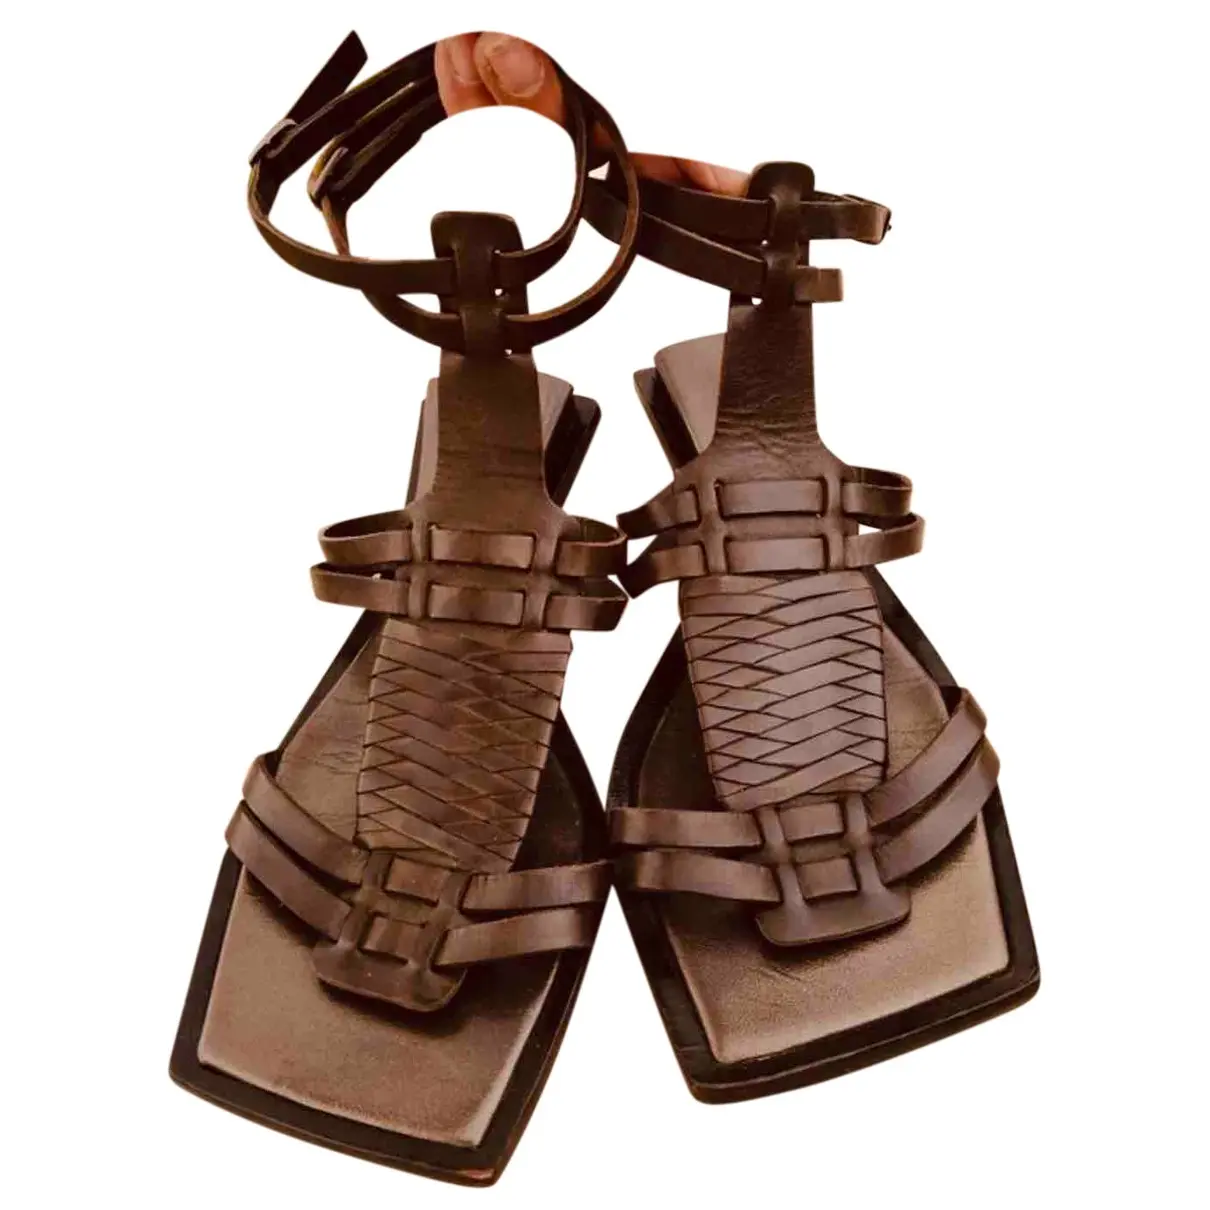 Leather sandal Kenzo